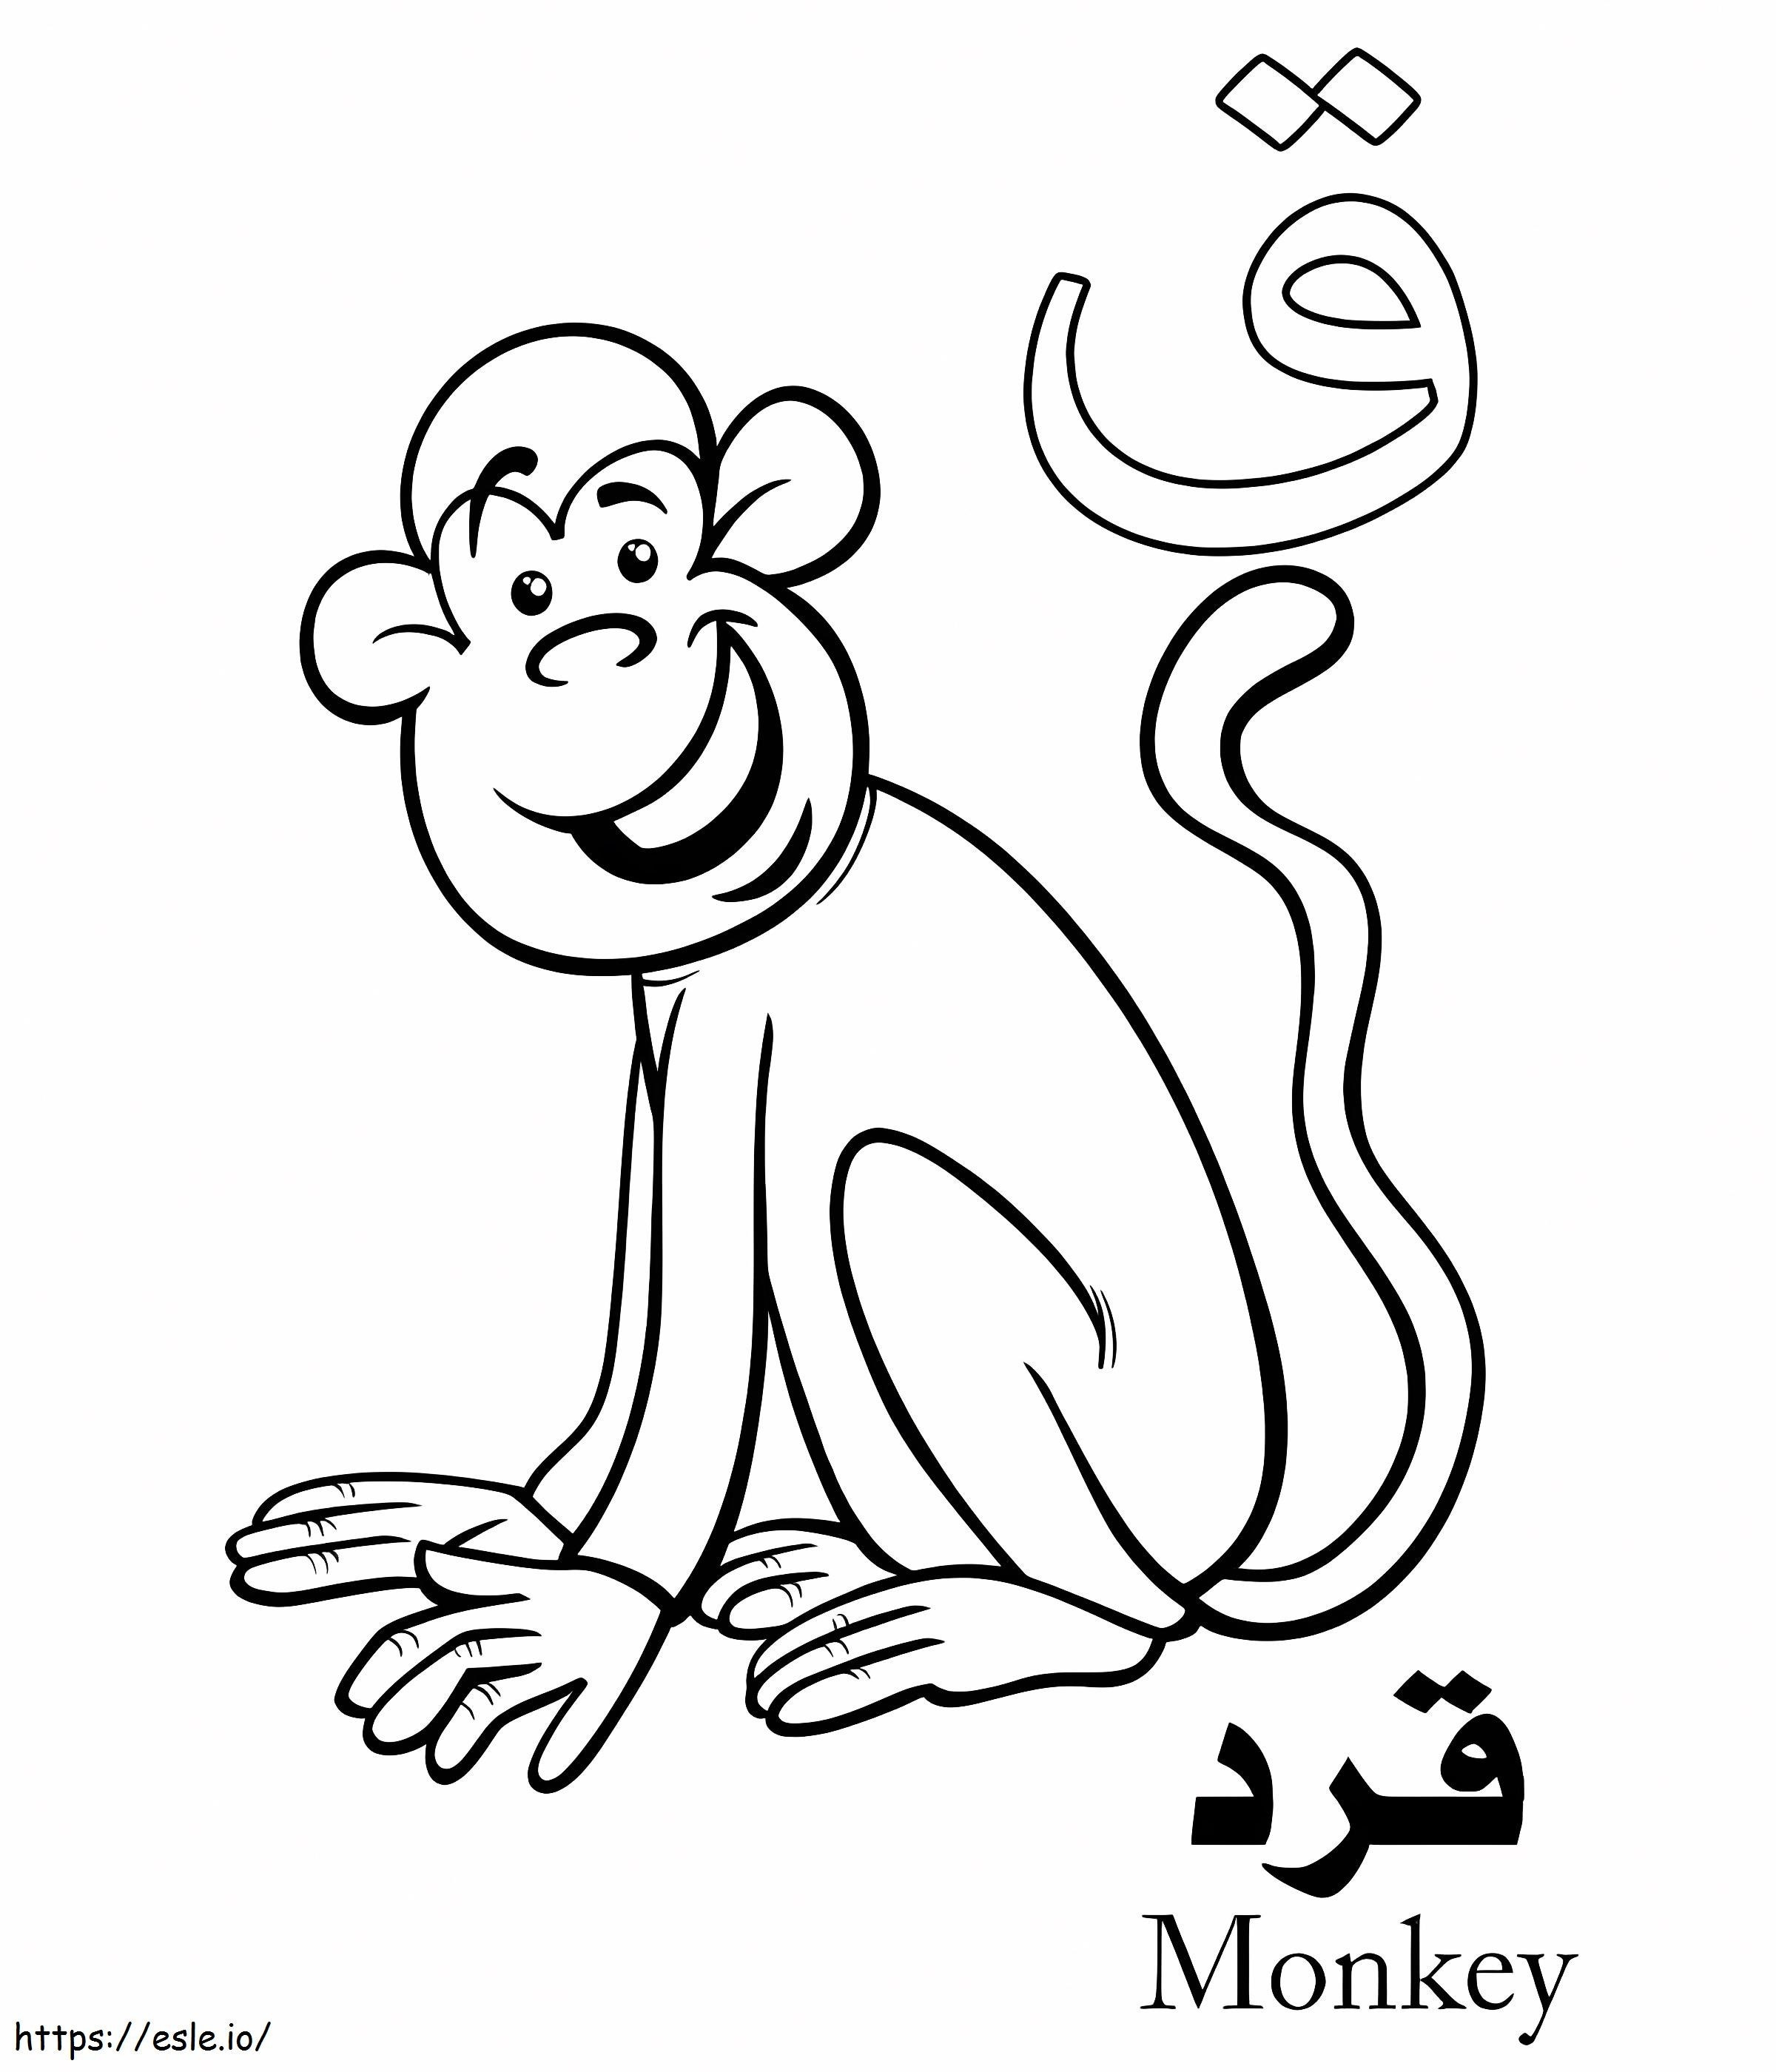 Monkey Arabic Alphabet coloring page